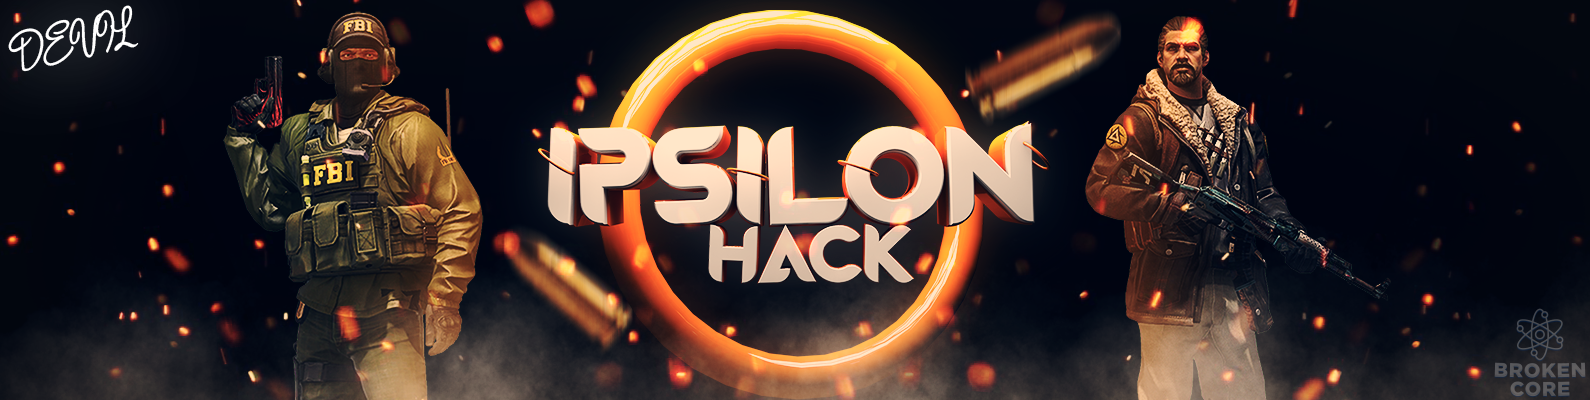 ipsilon hackWT.png